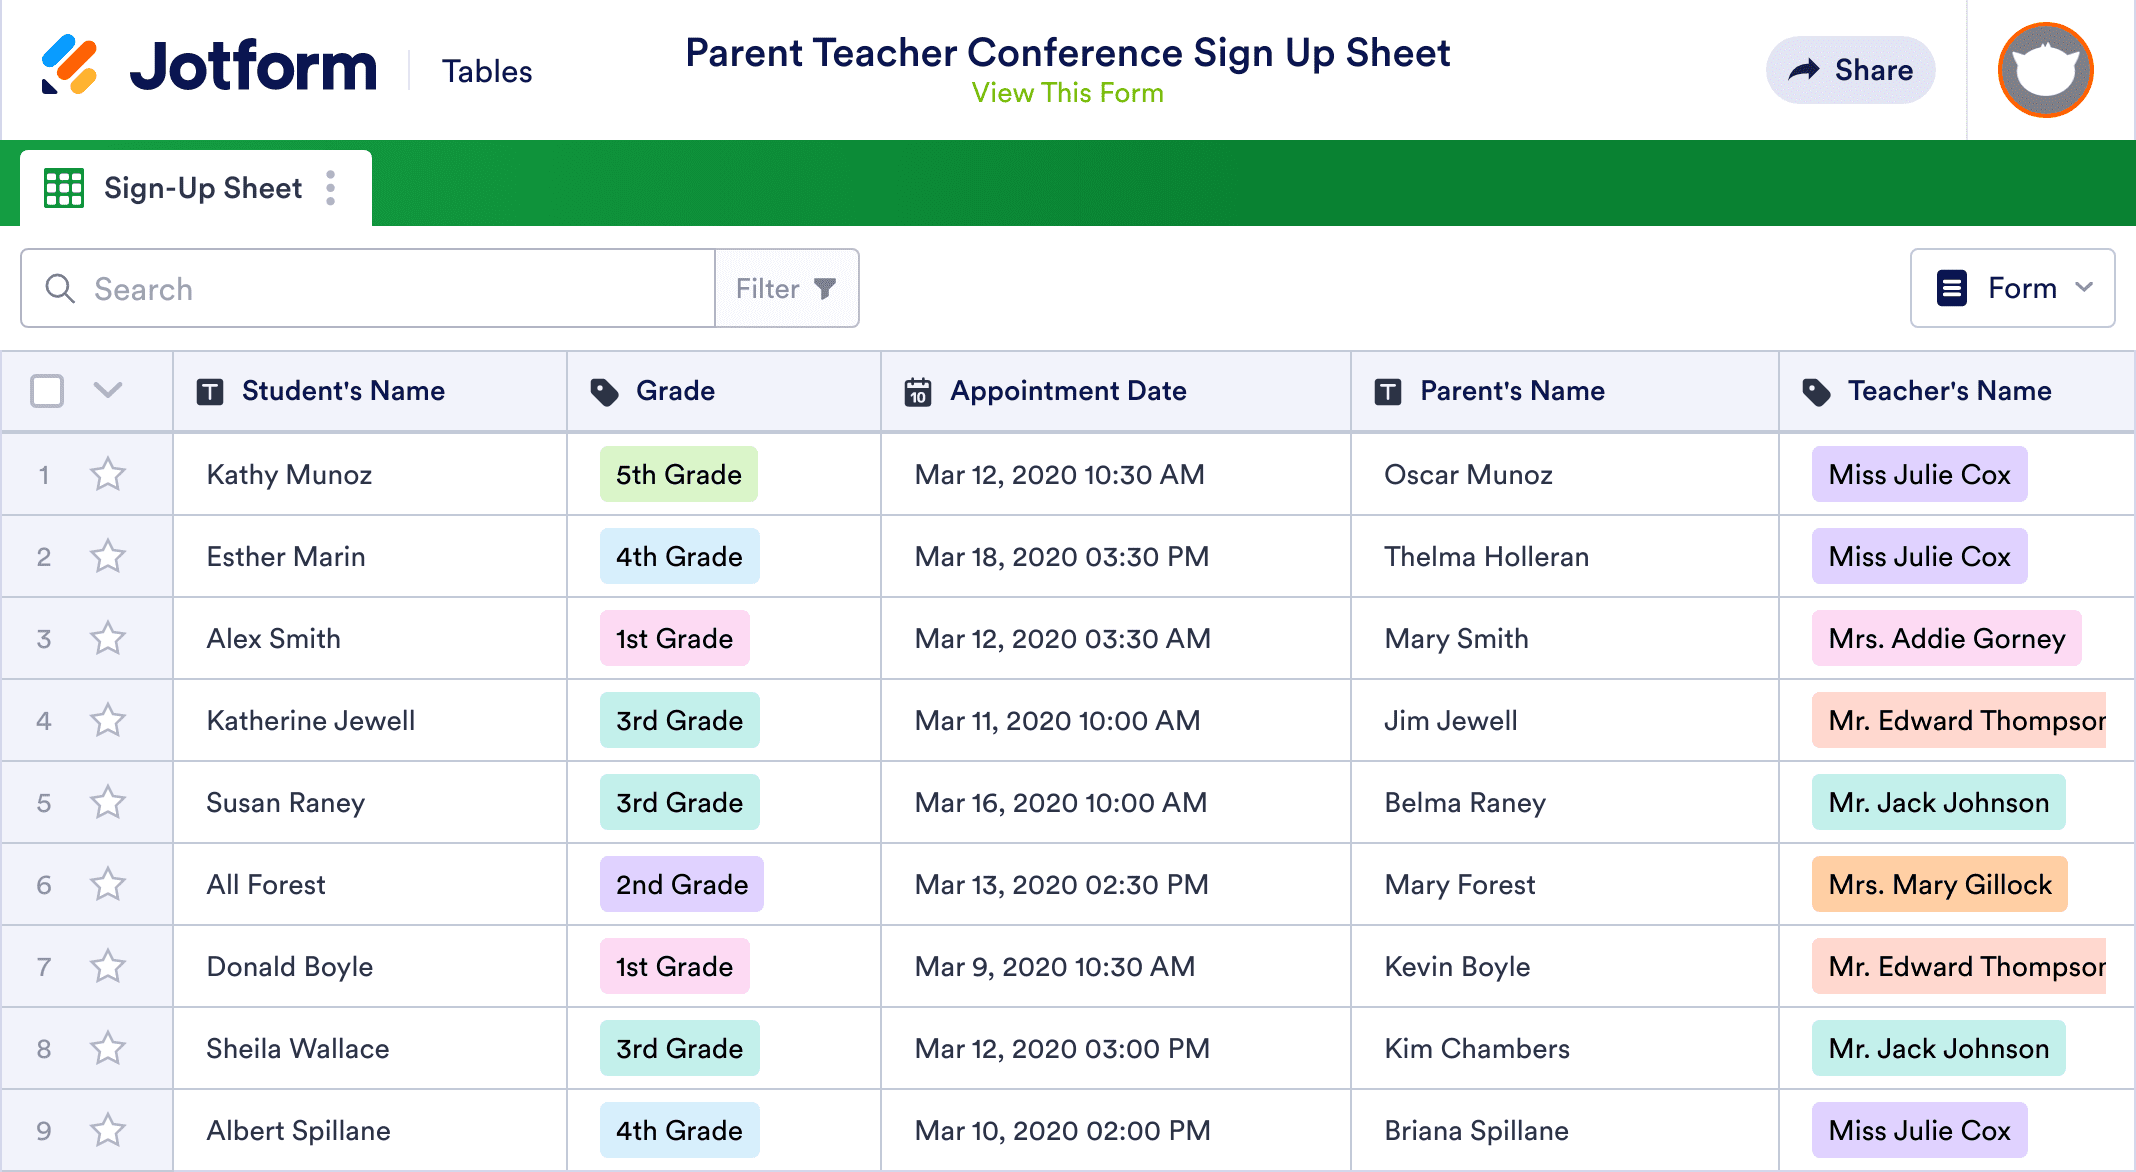 Parent Teacher Conference Sign Up Sheet